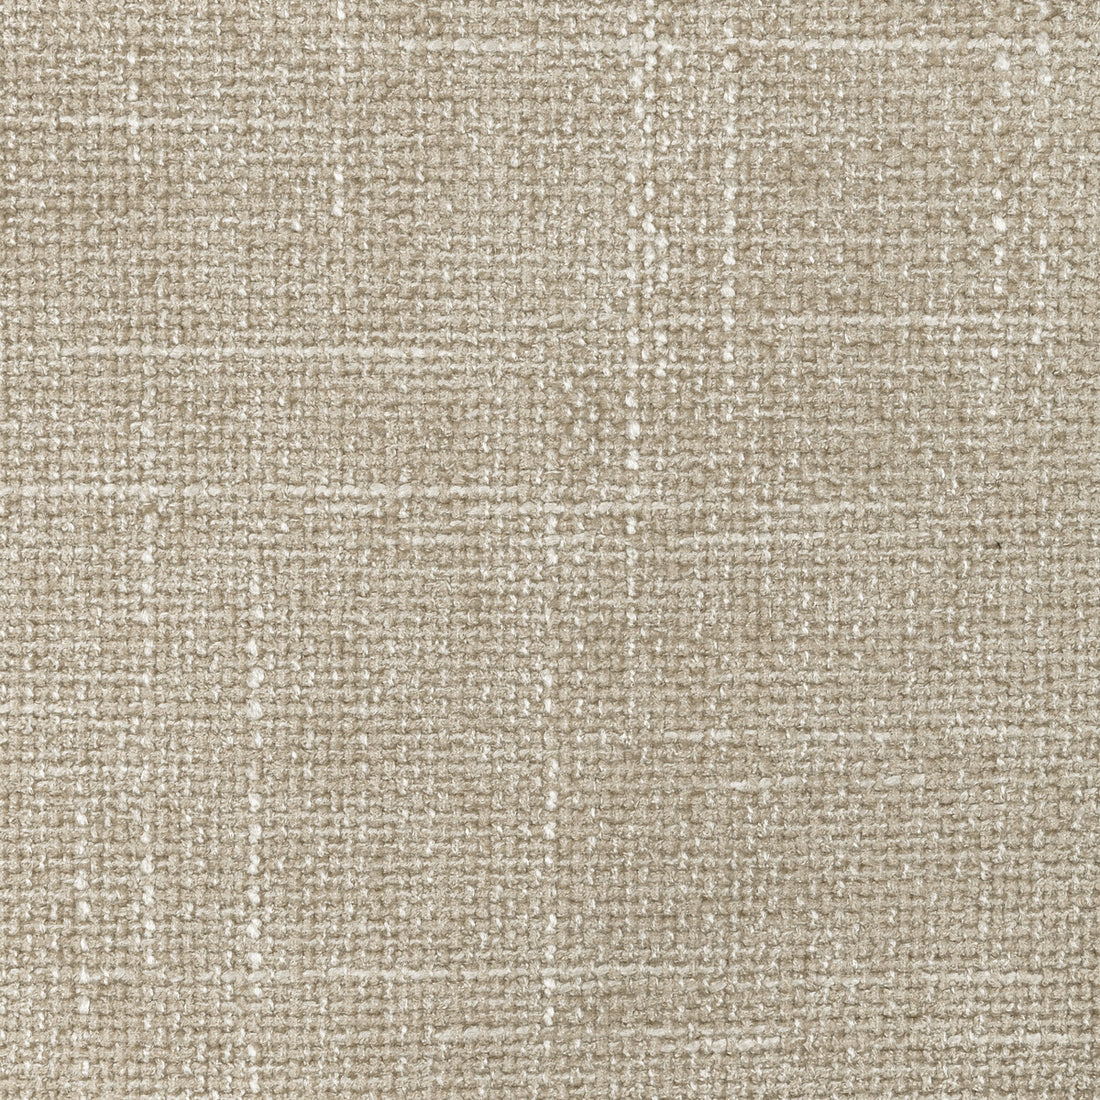 Kravet Smart fabric in 36579-1601 color - pattern 36579.1601.0 - by Kravet Smart in the Performance Kravetarmor collection